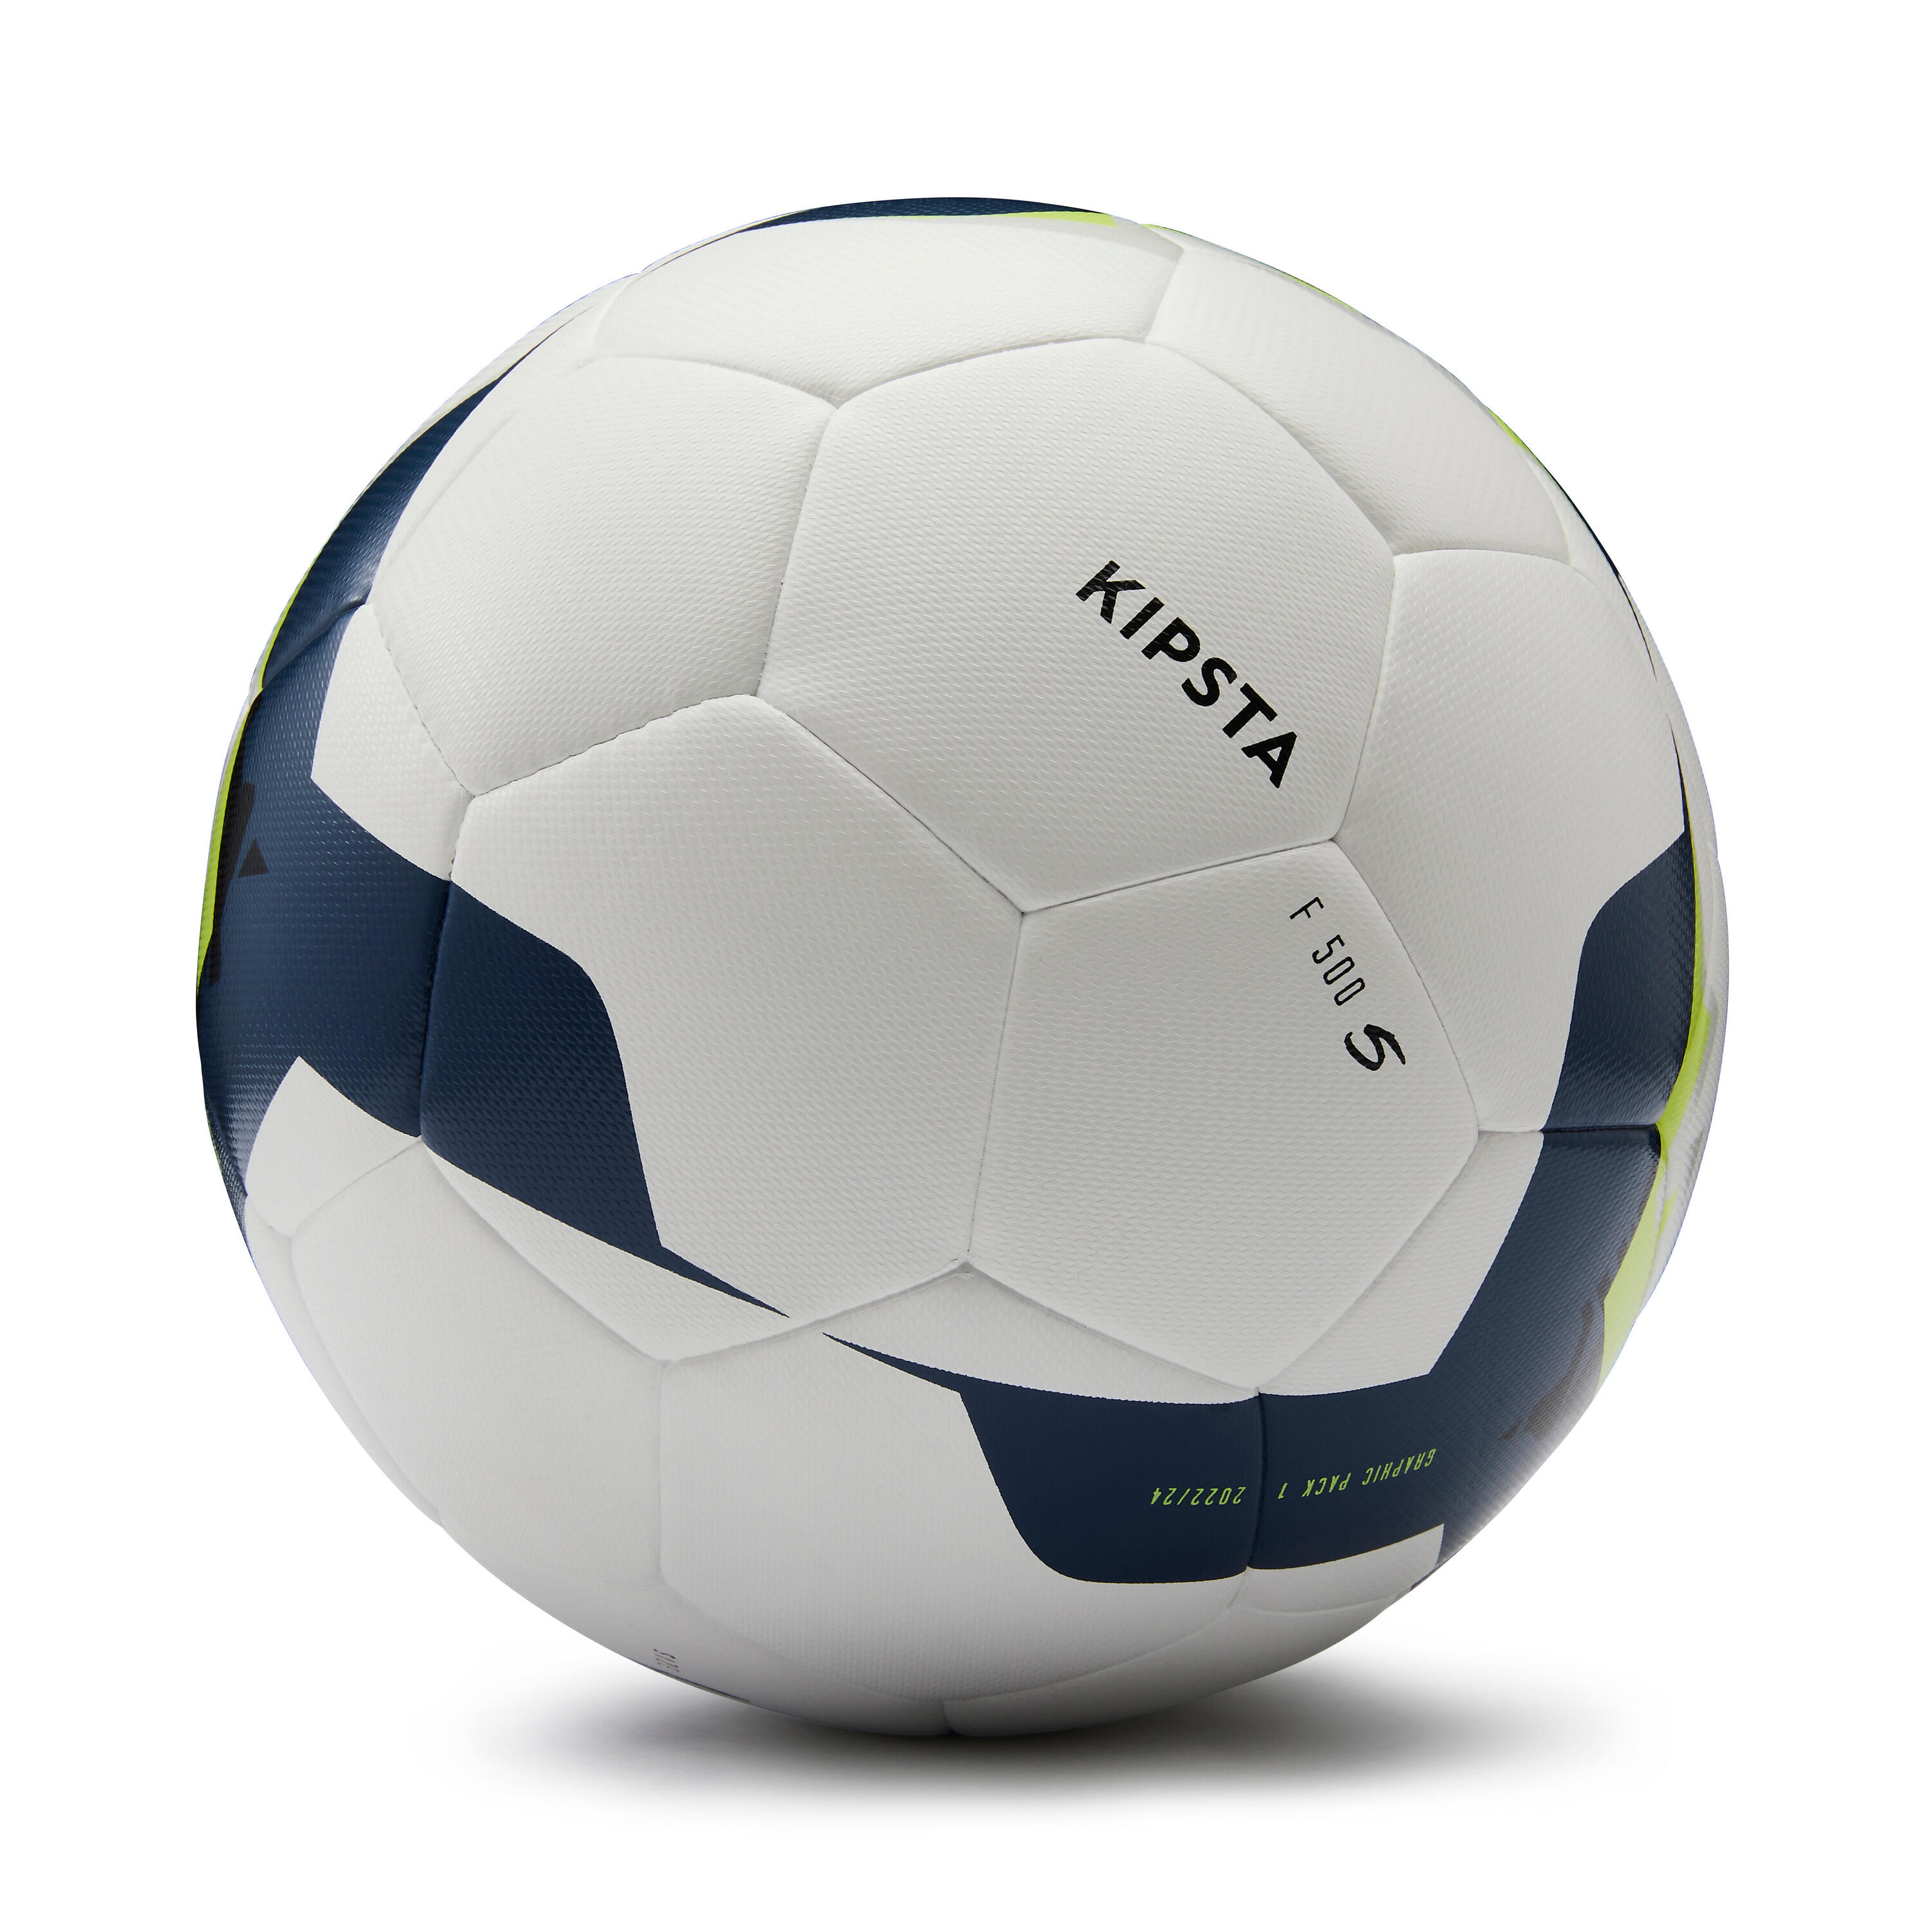 Adult size 5 fifa hybrid football, white 7/7